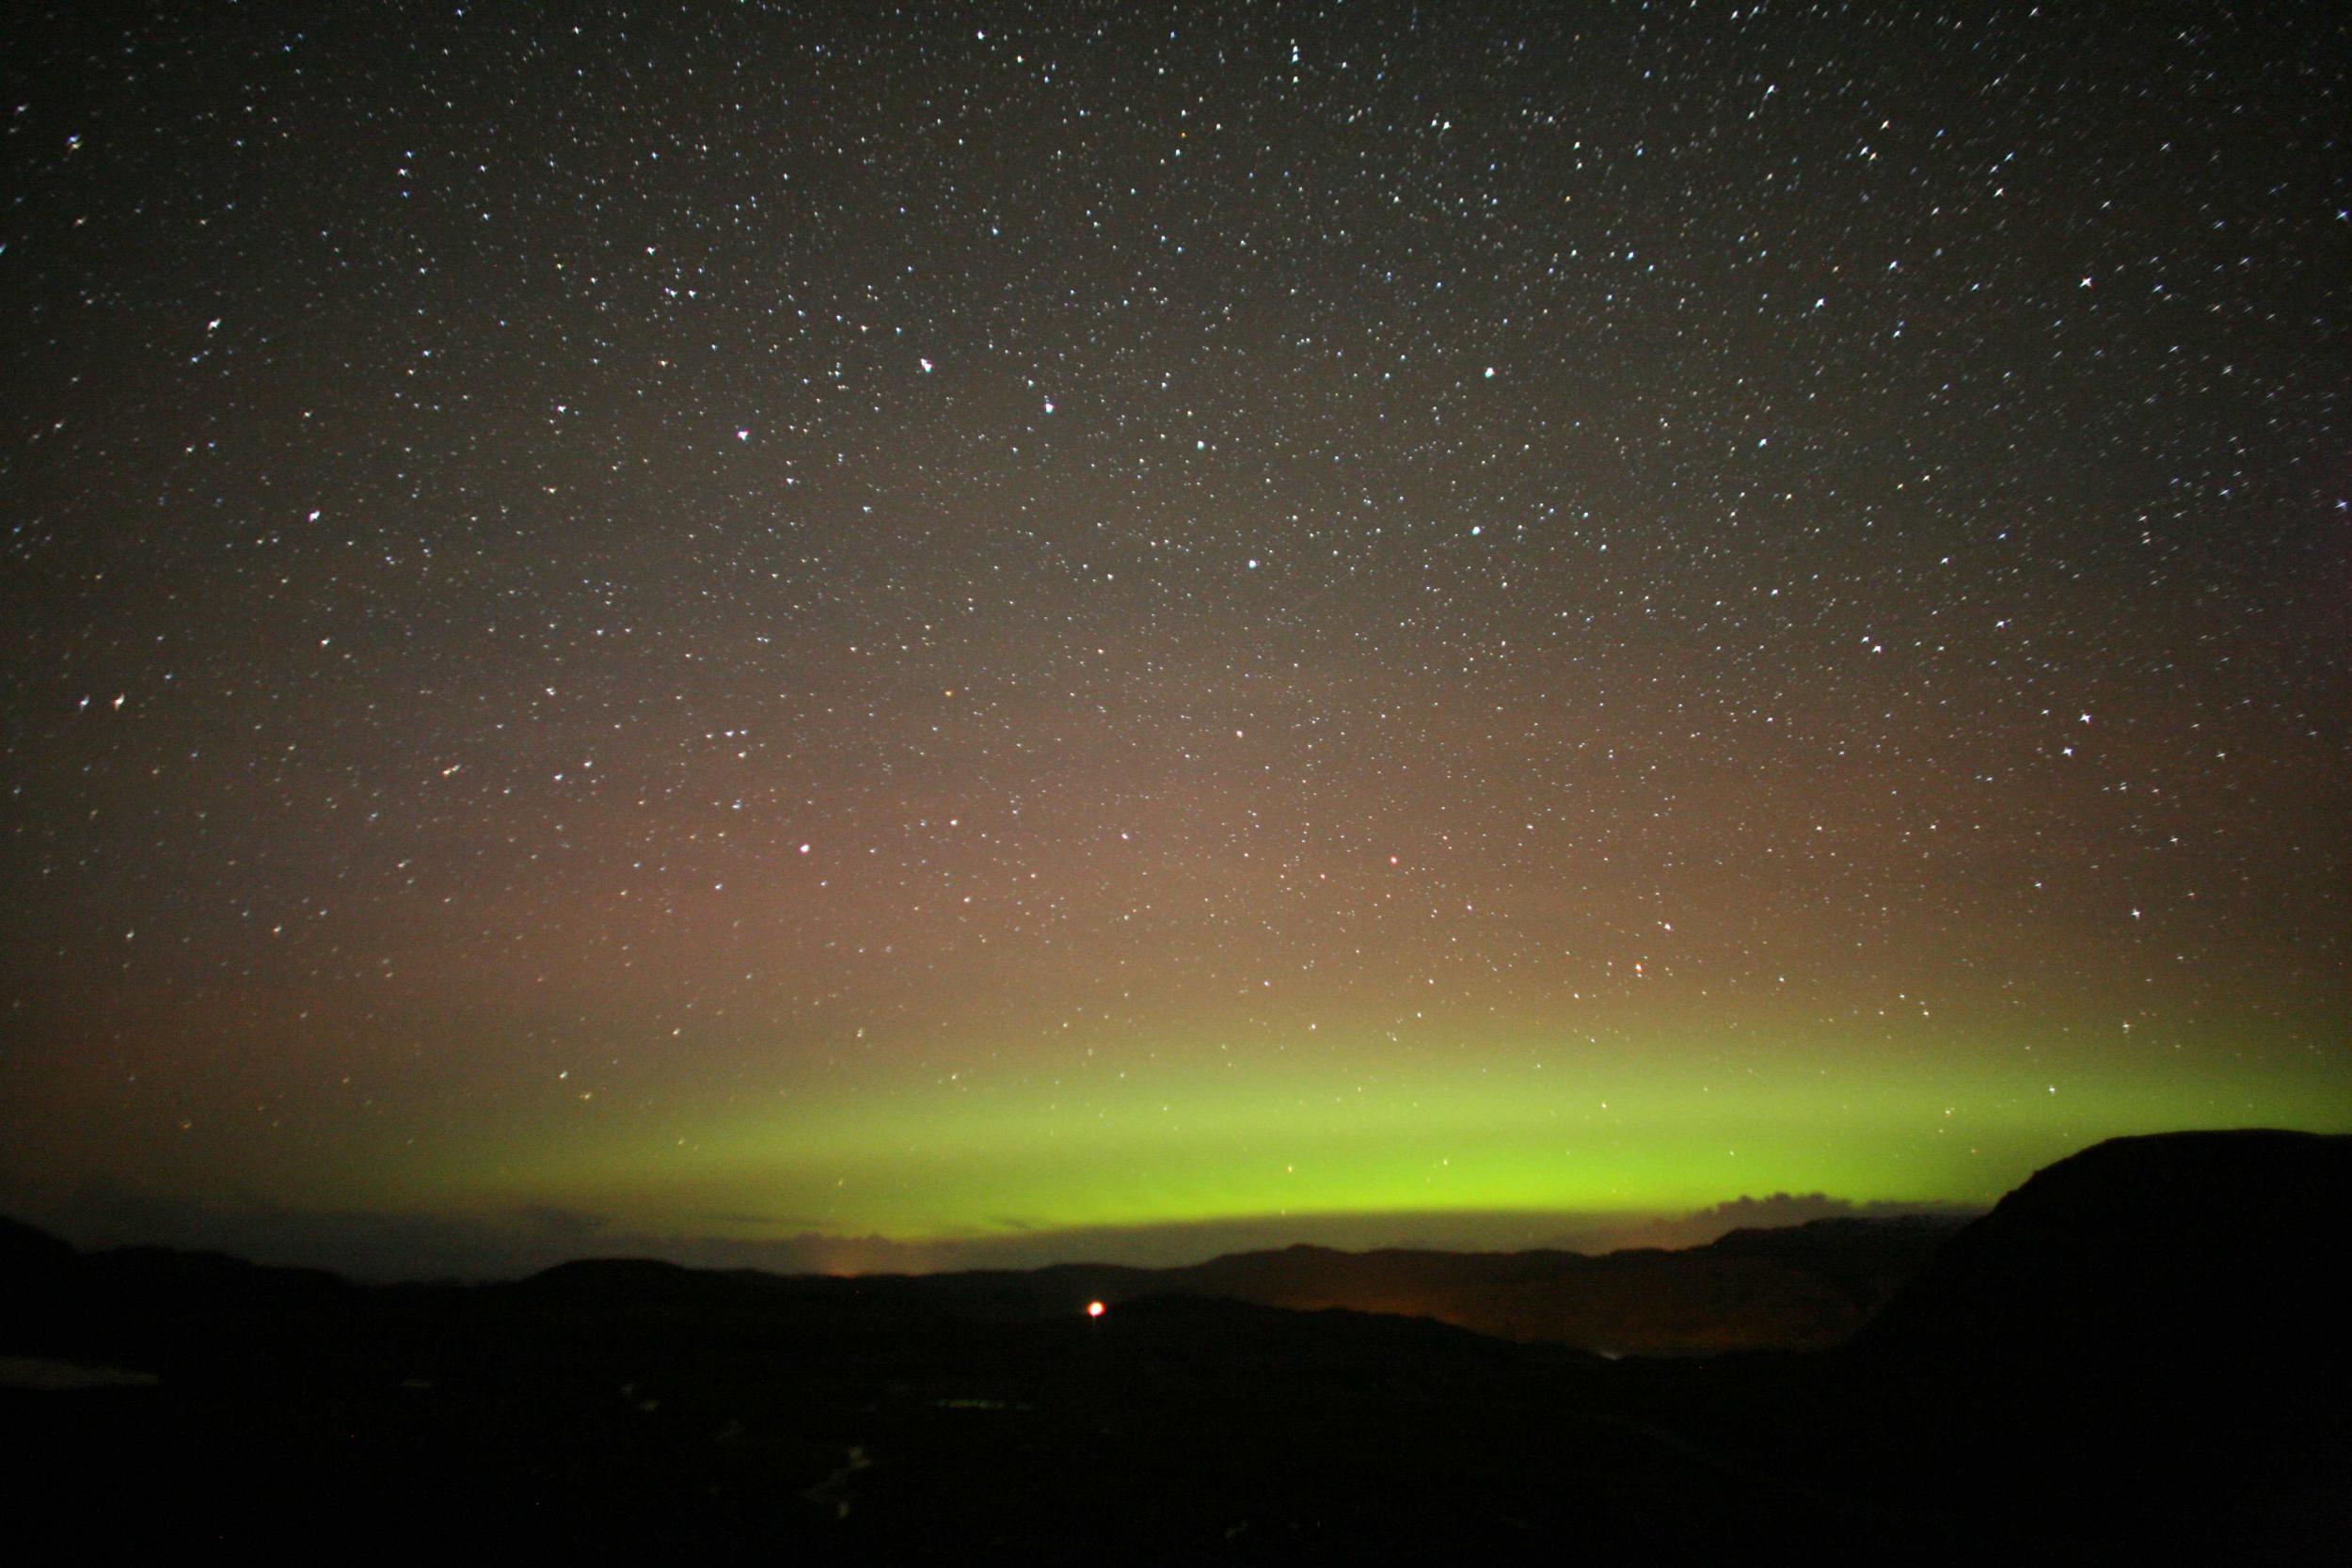 The aurora over Scotland